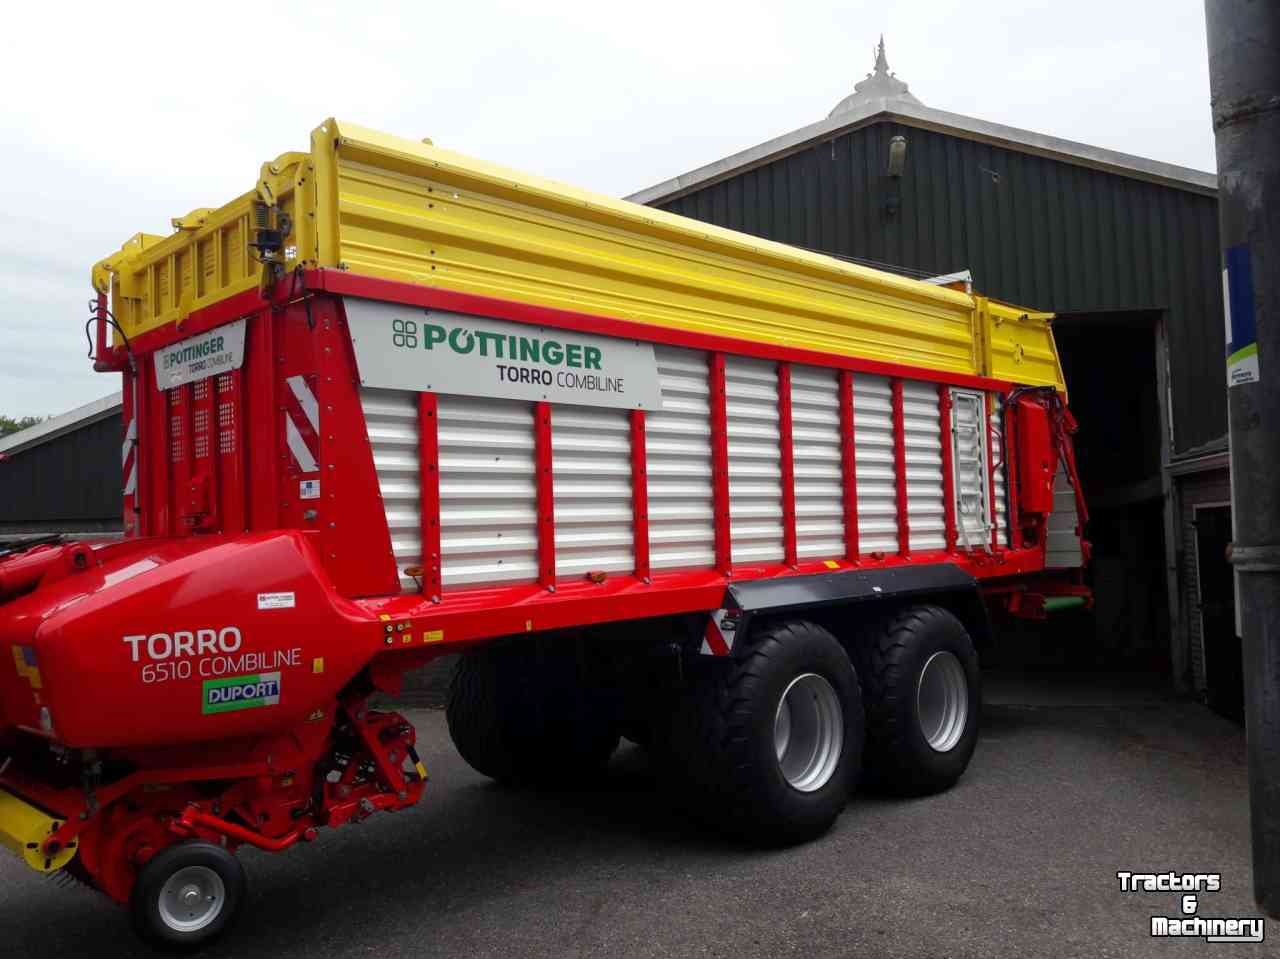 Self-loading wagon Pottinger Torro 6510 Combiline